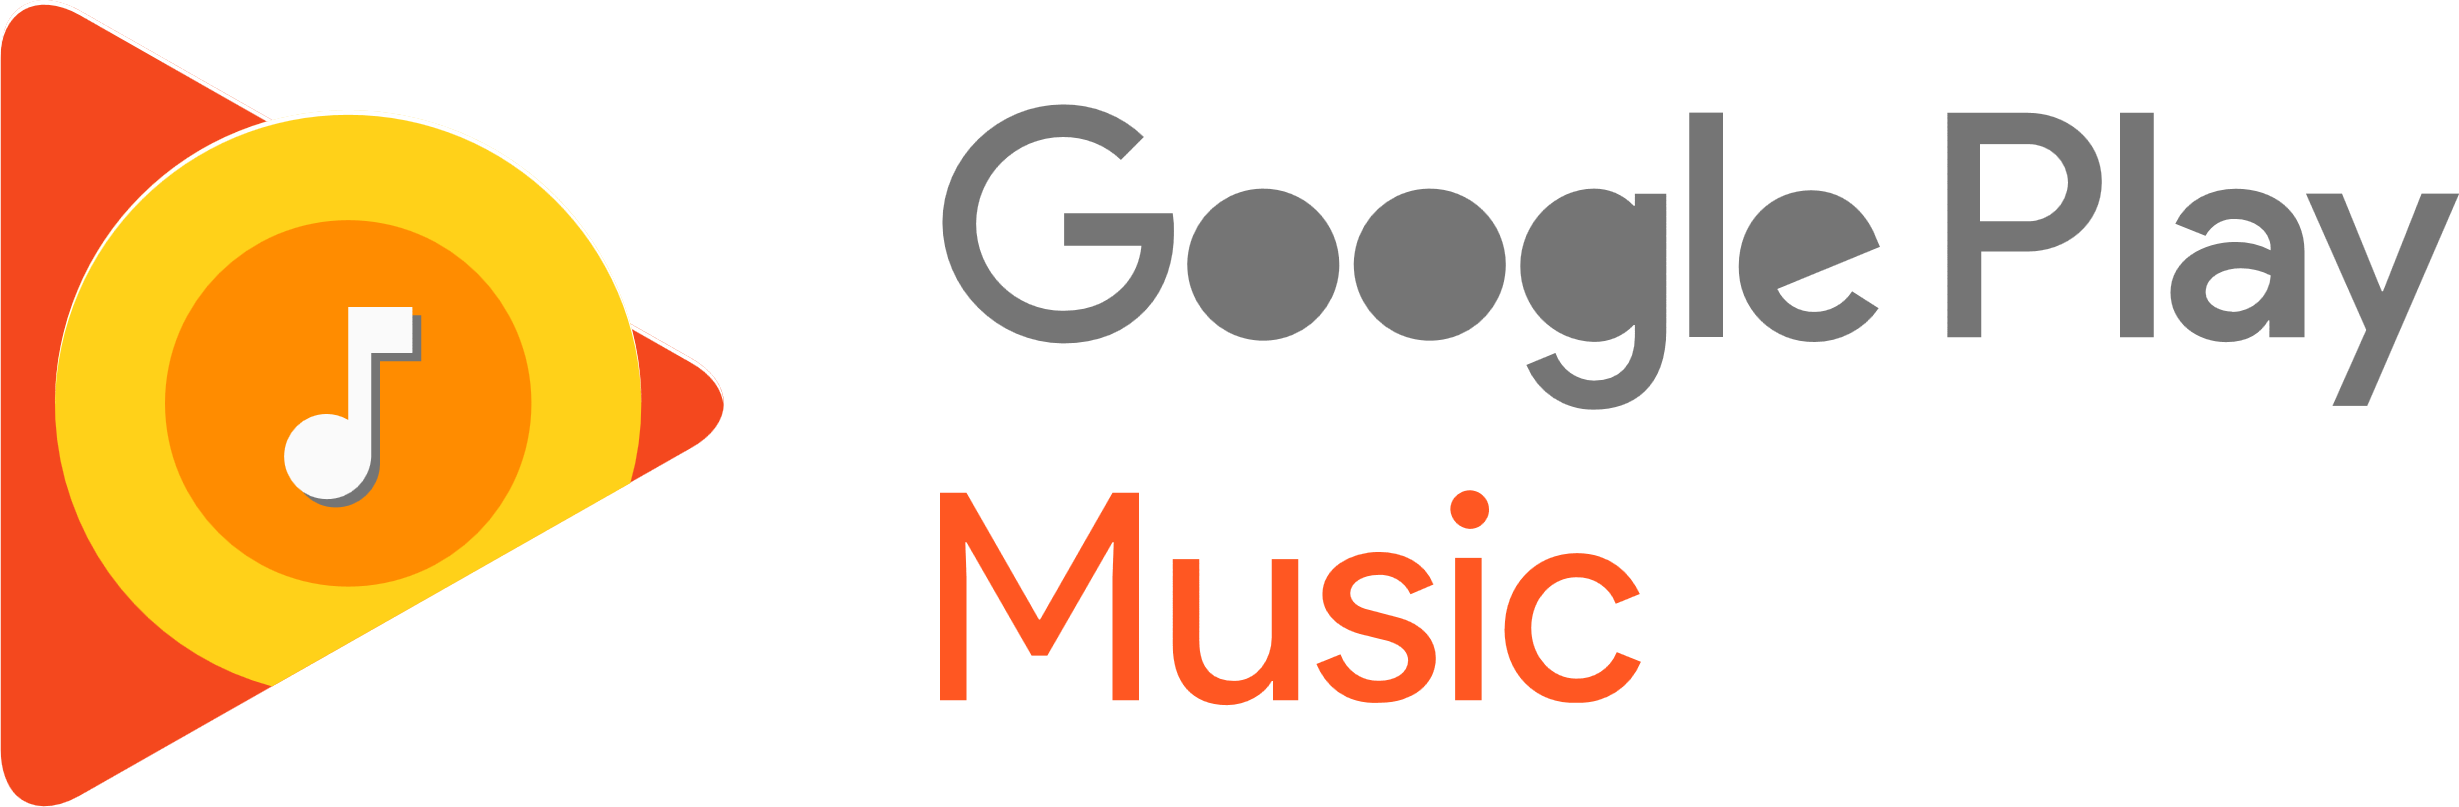 google-music